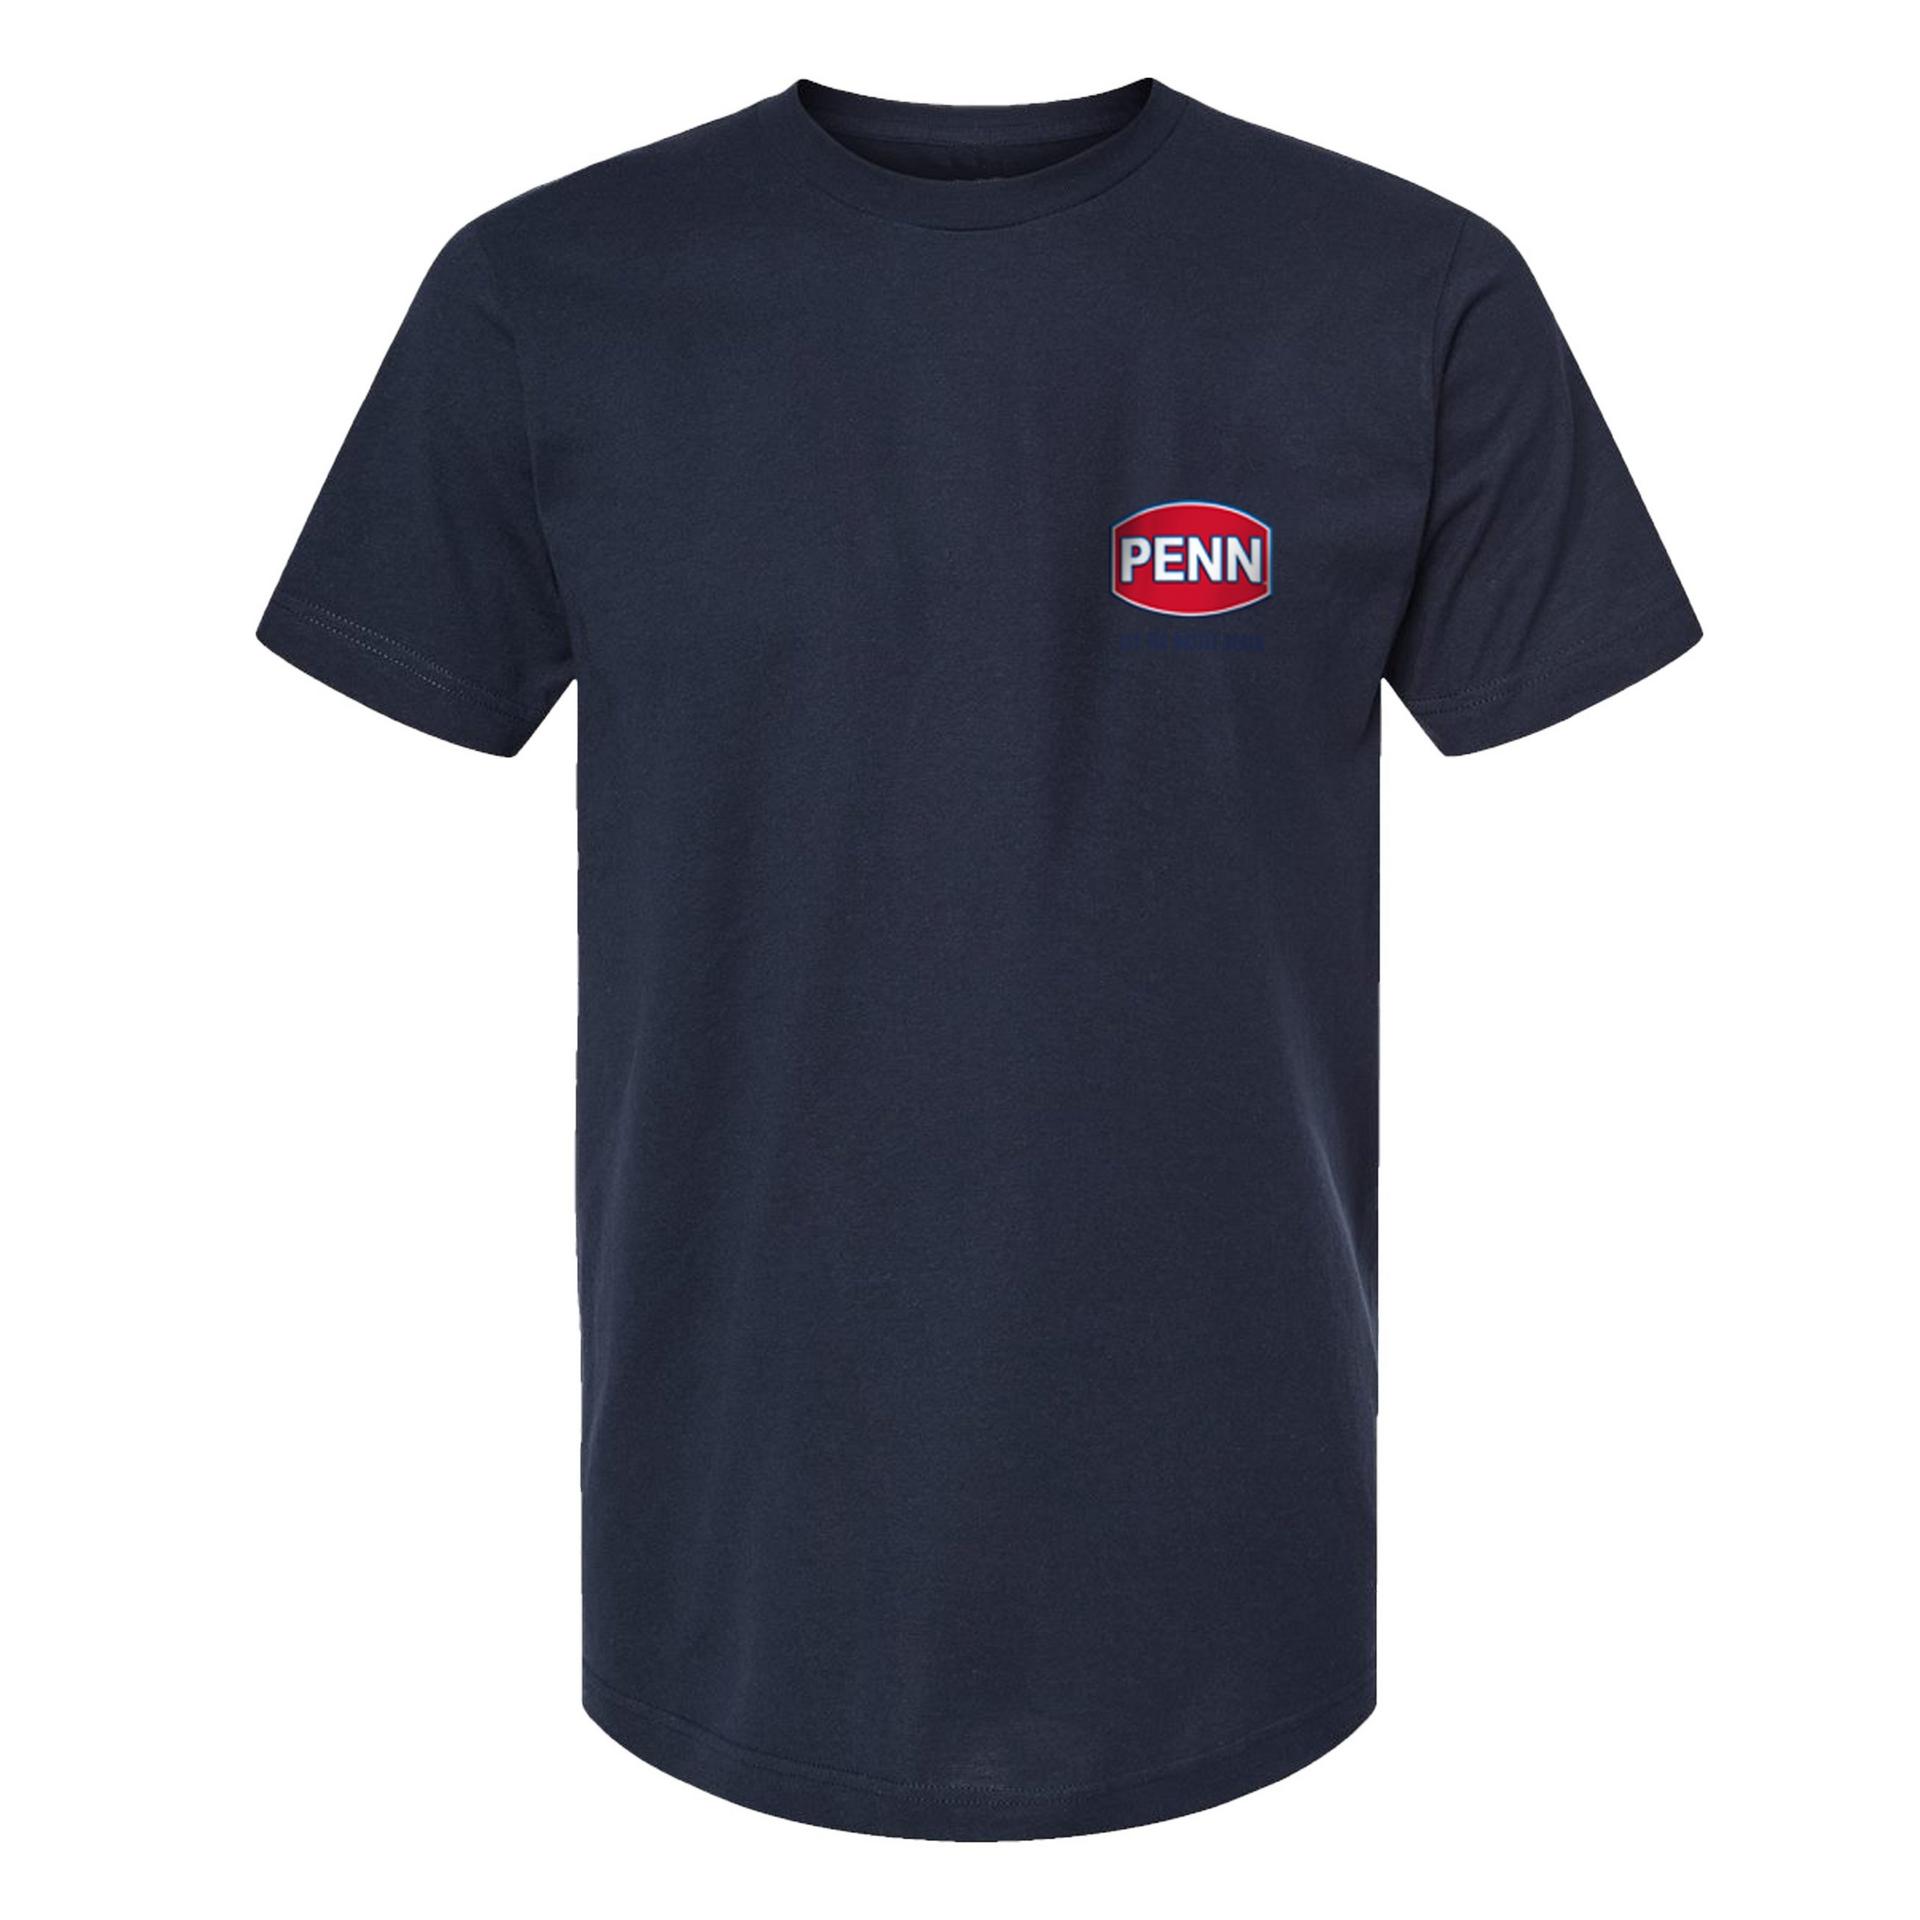 PENN PENN® Long Sleeve T-Shirt